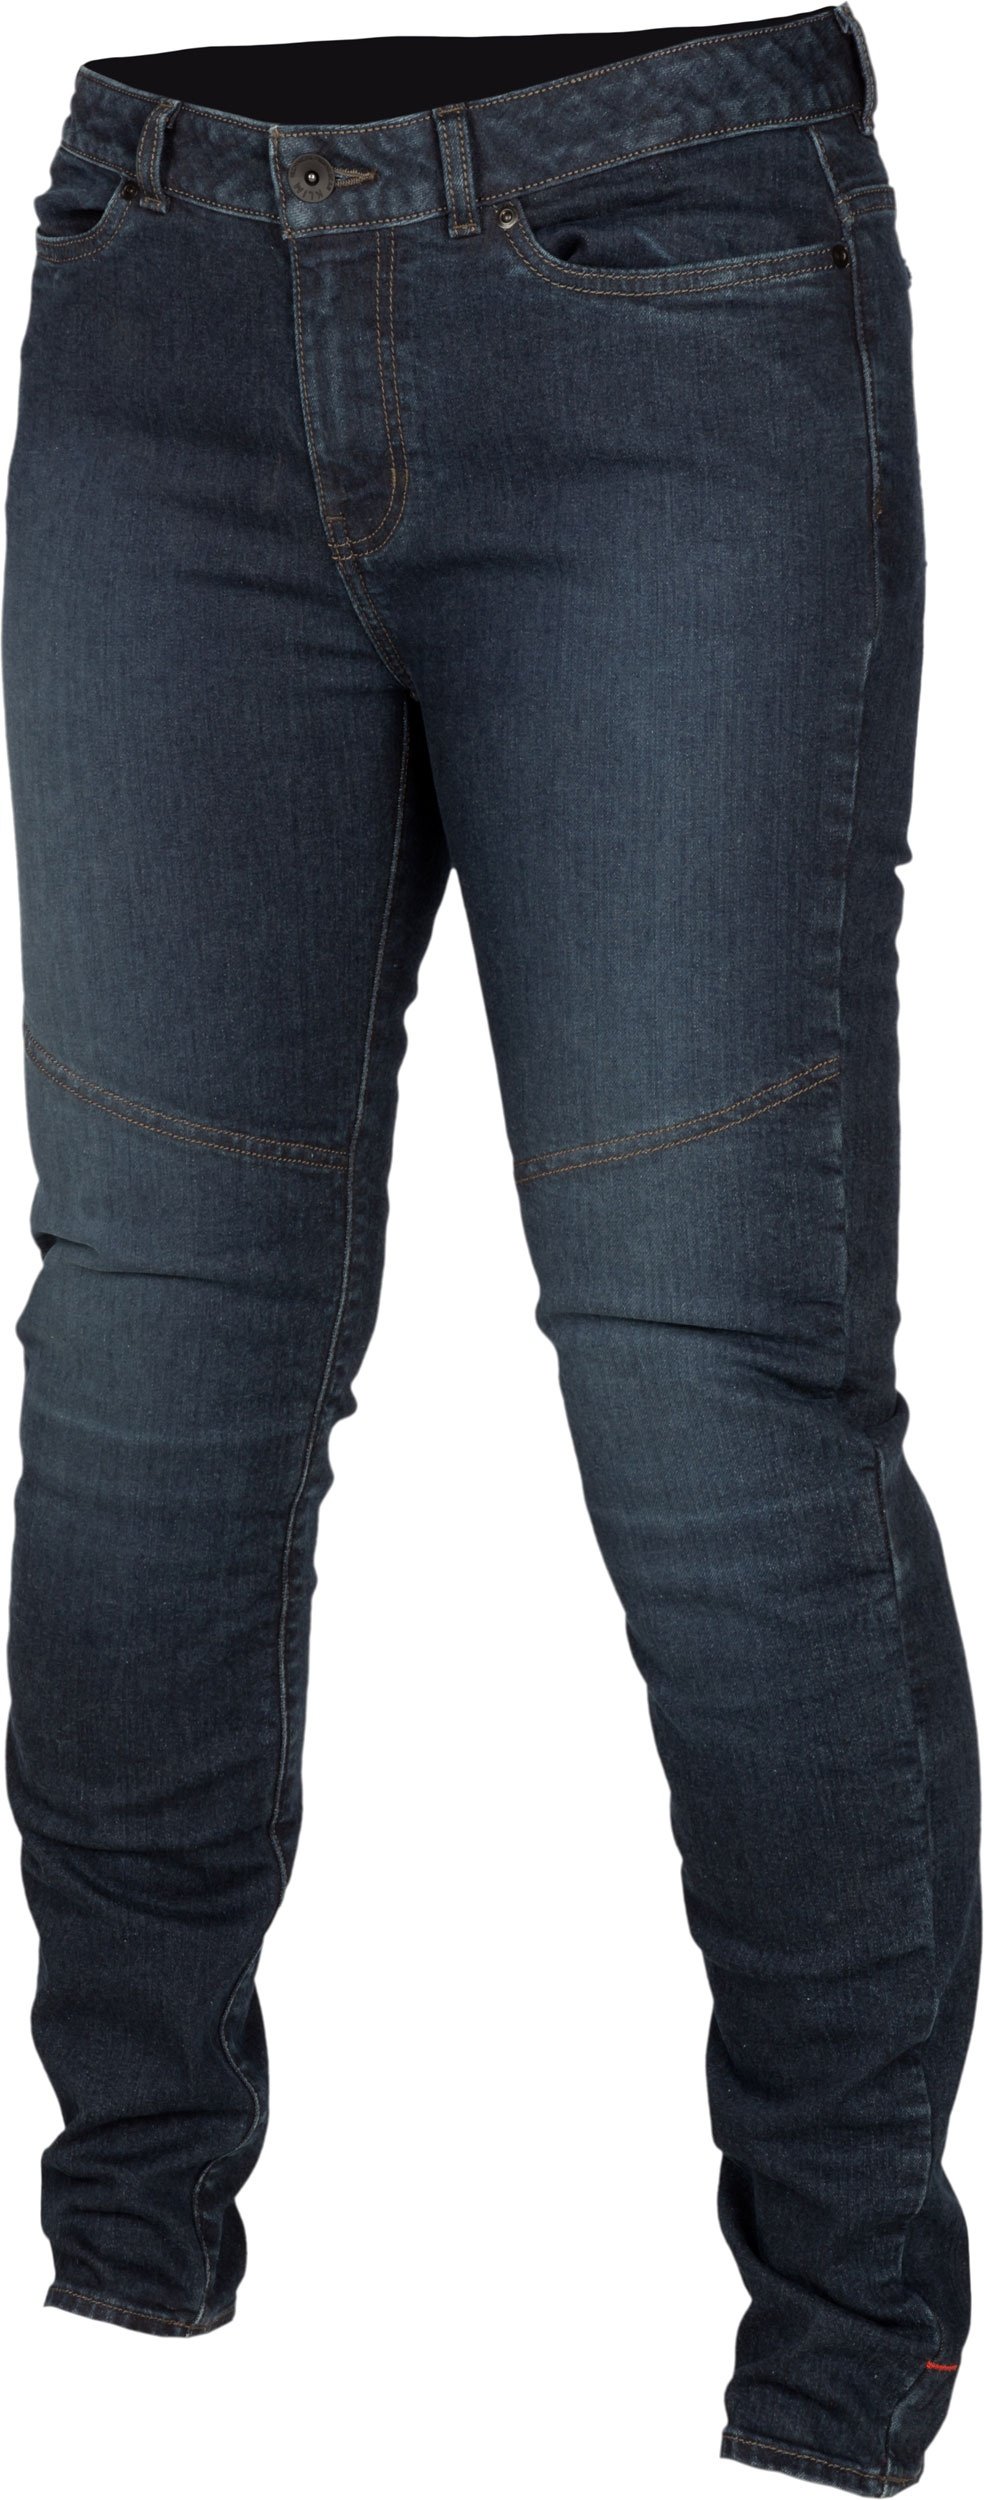 Klim Betty Tapered Stretch Denim, jeans femmes - Bleu Foncé - 8